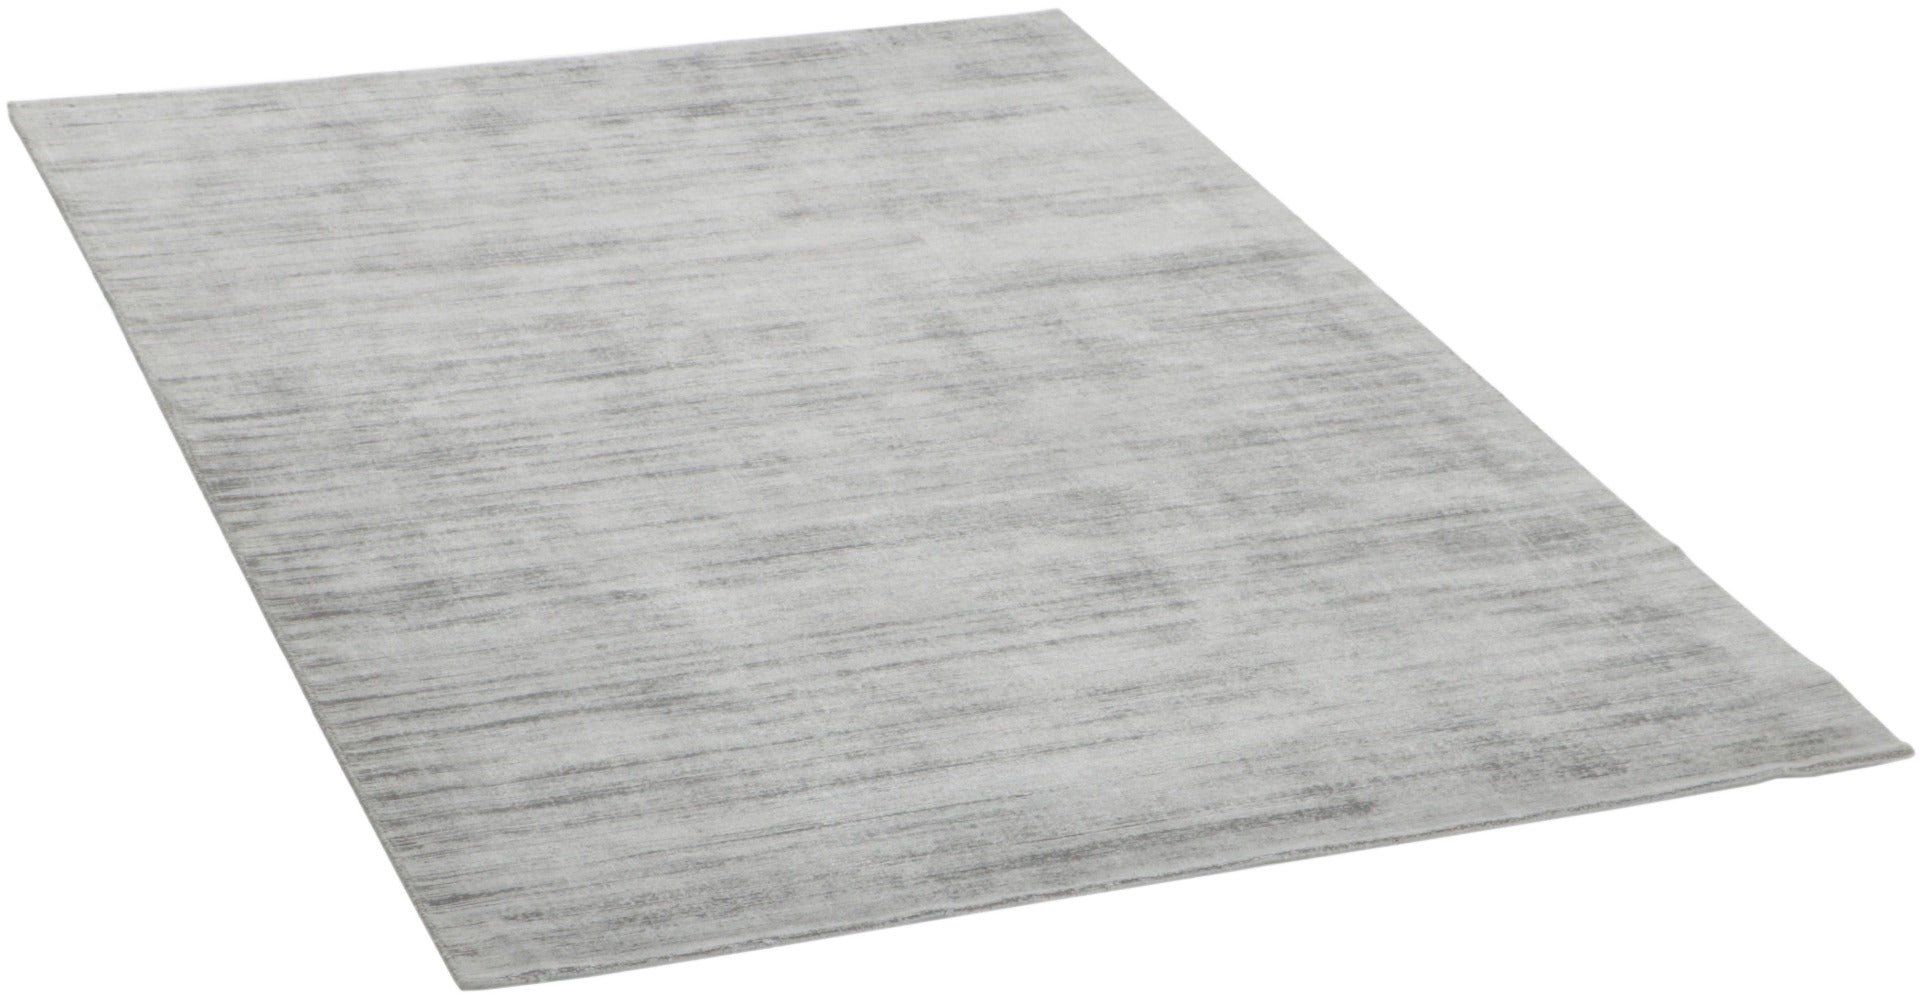 plain grey rug
